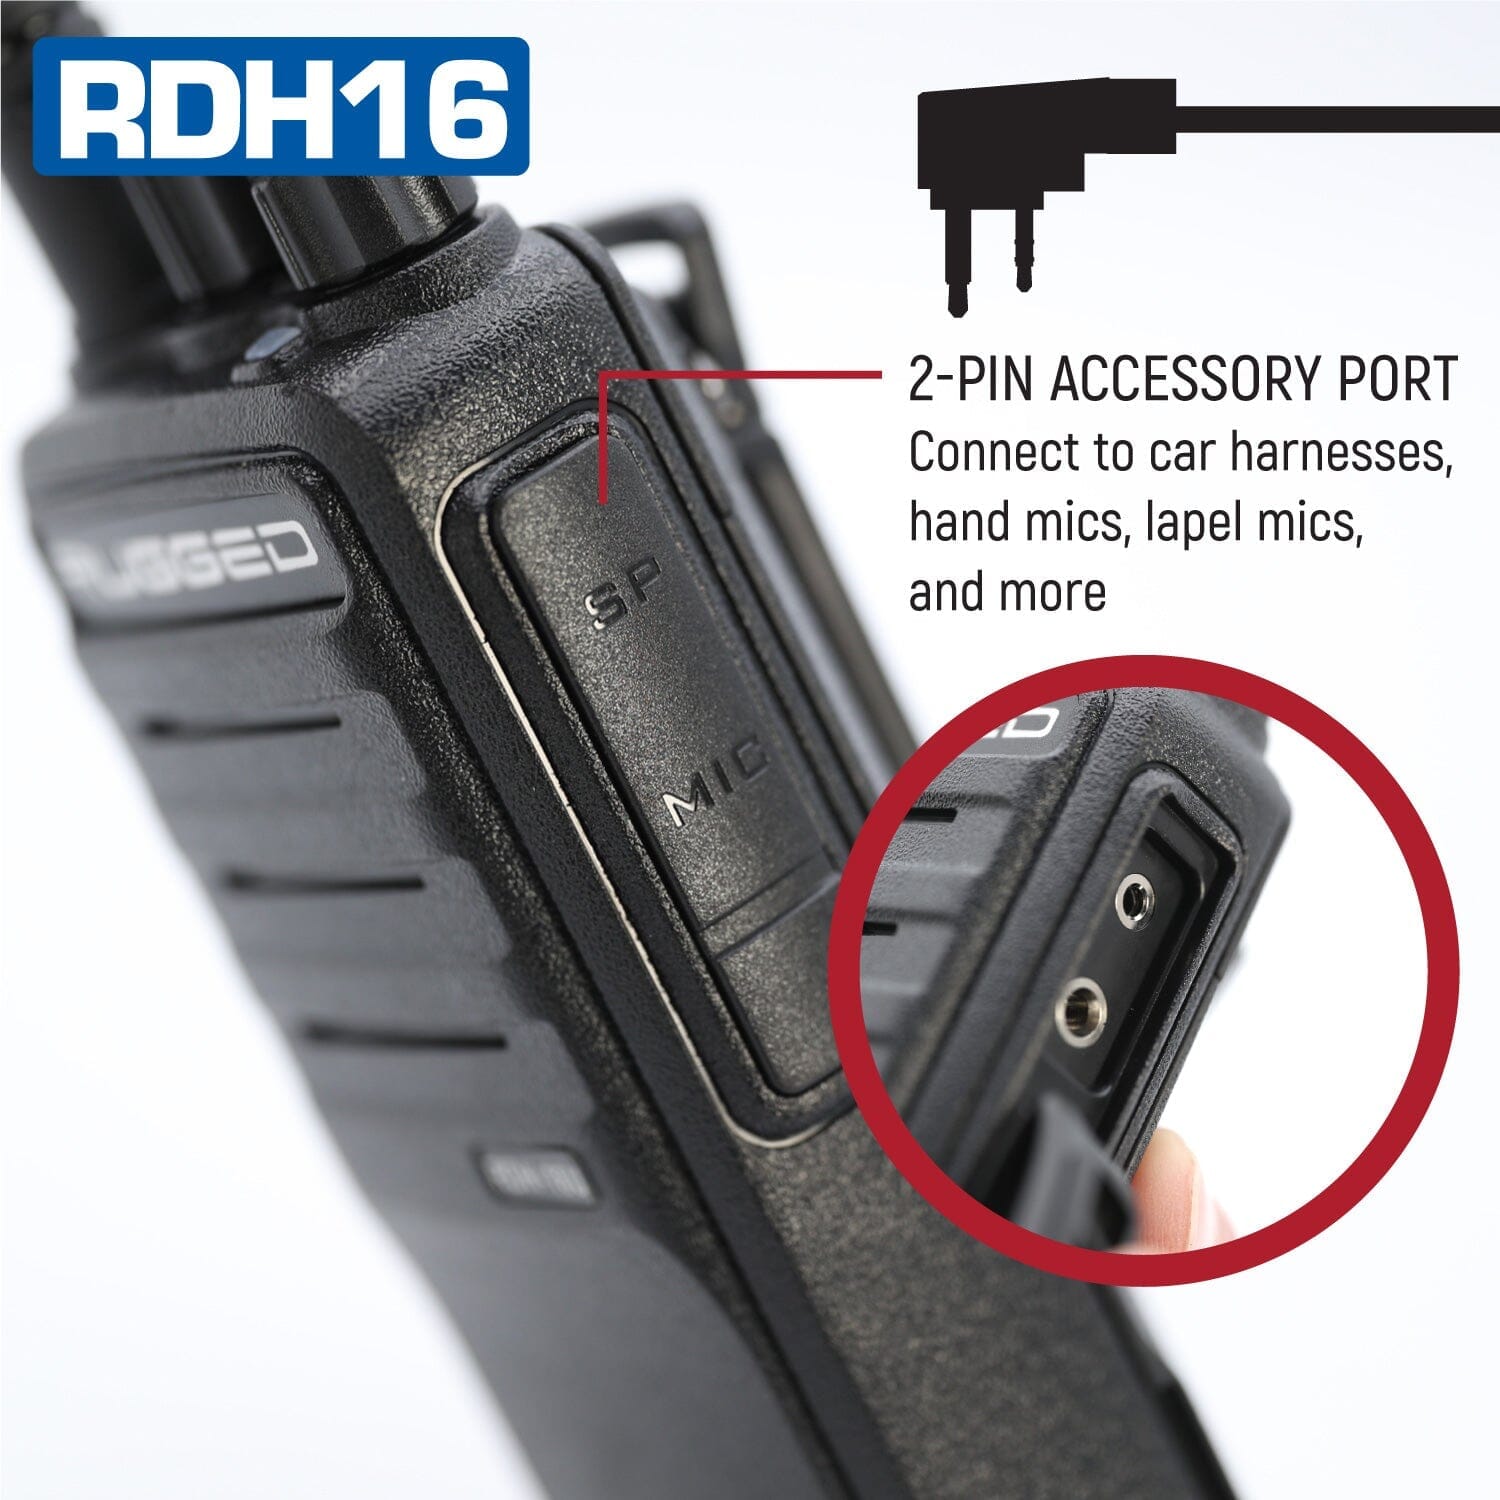 Rugged RDH16 VHF Digital and Analog Handheld Radio - Demo - Clearance